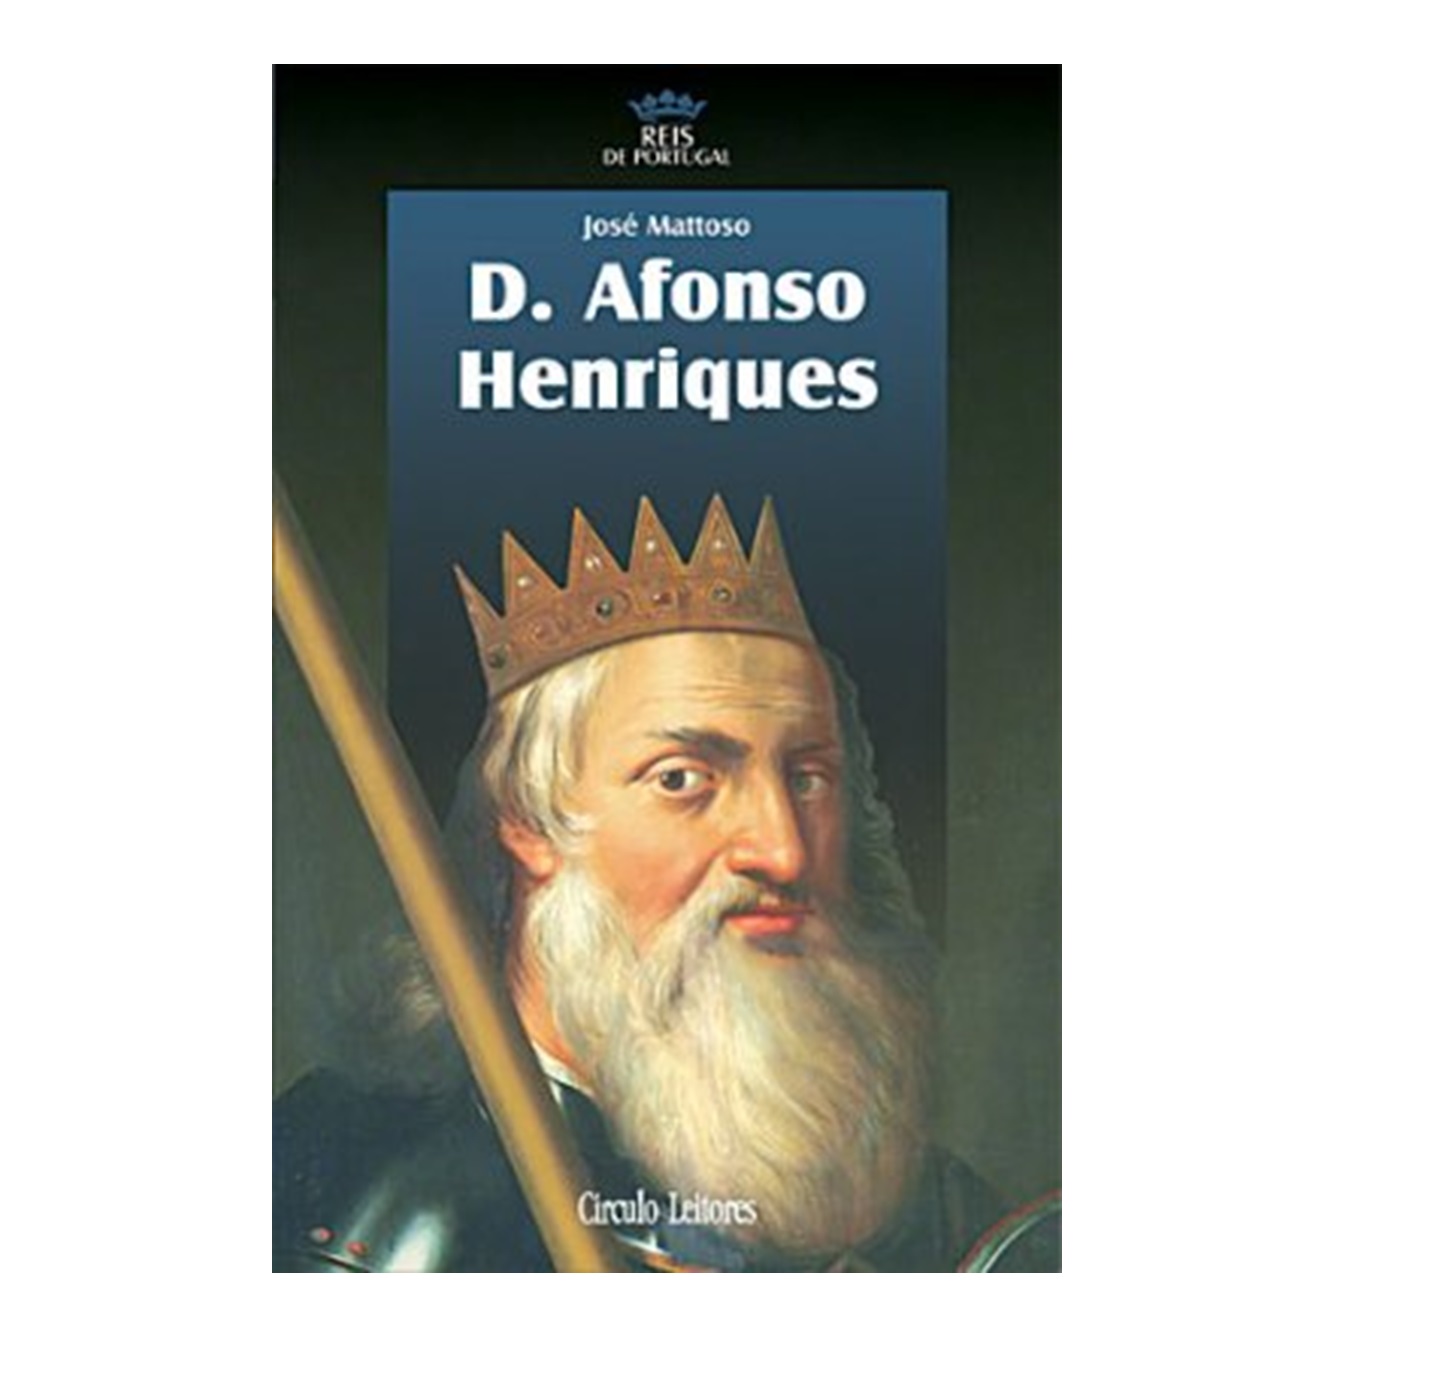 D. Afonso Henrqiues